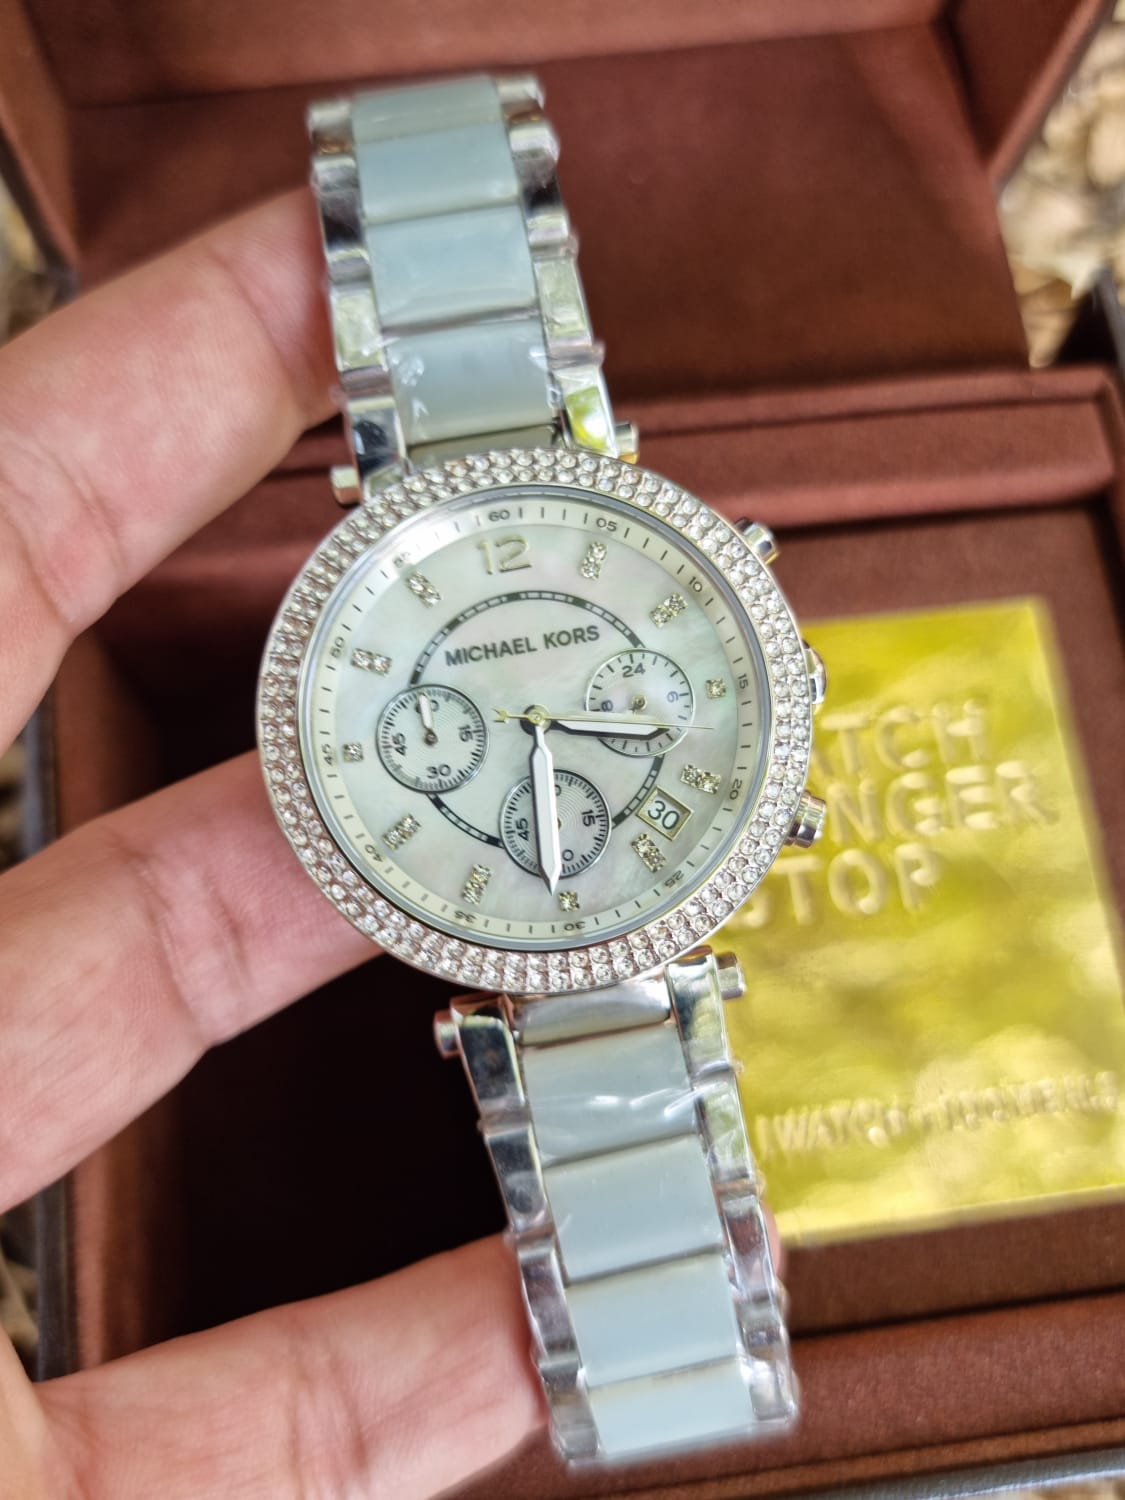 Michael Kors Women’s Quartz Stainless Steel Mother of Pearl Dial 39mm Watch MK6138